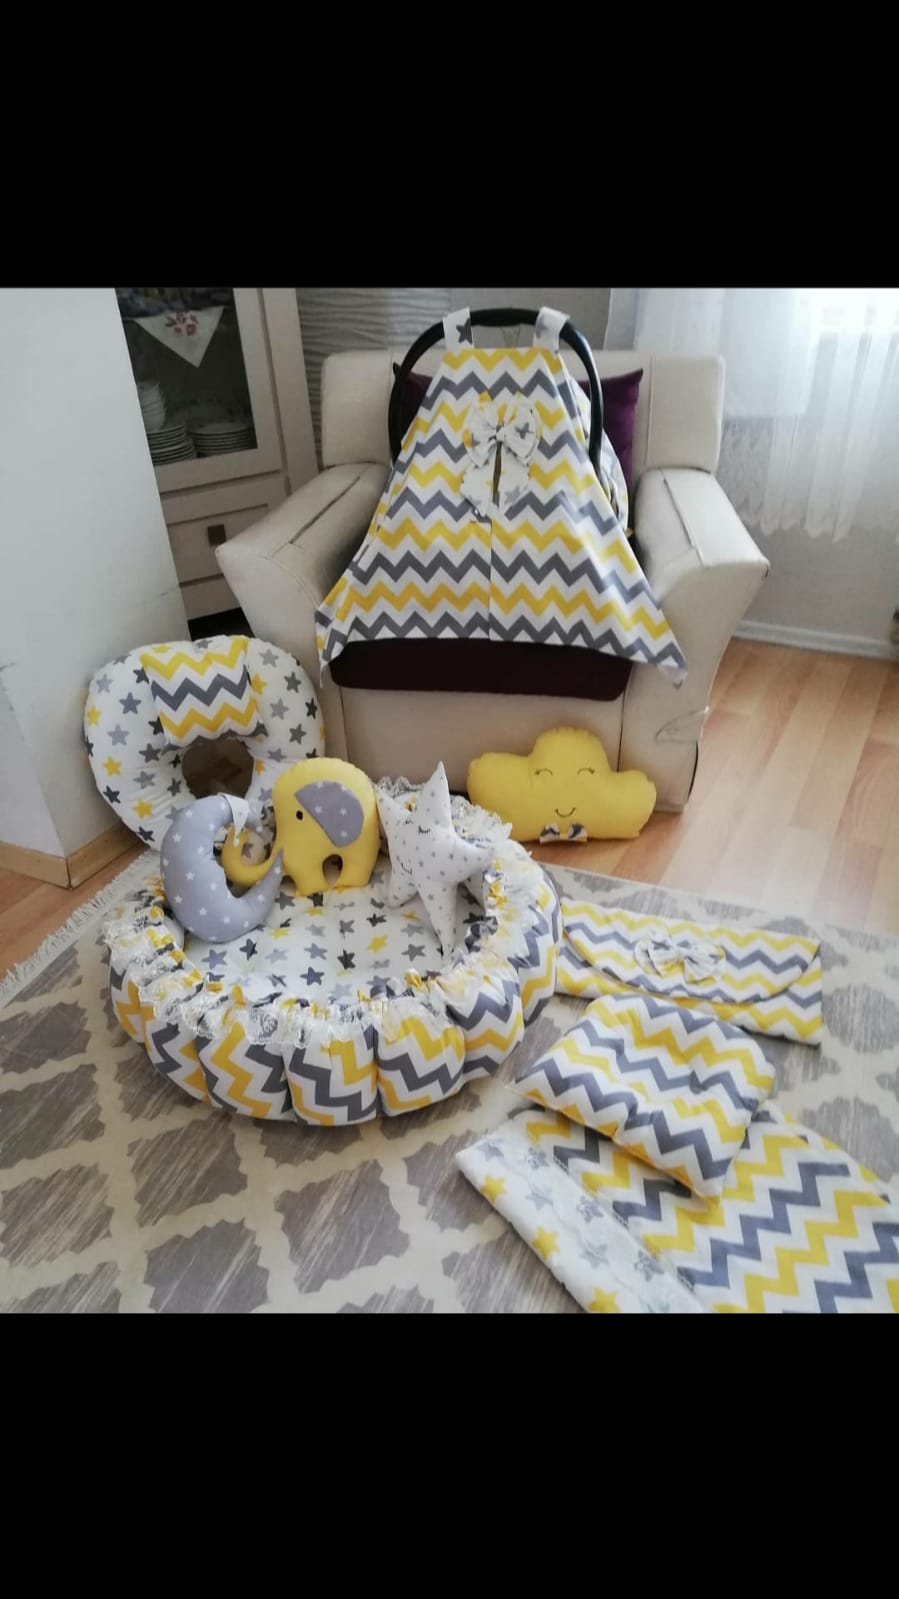 Sleeping and gaming cushions Yellow-White-Grey